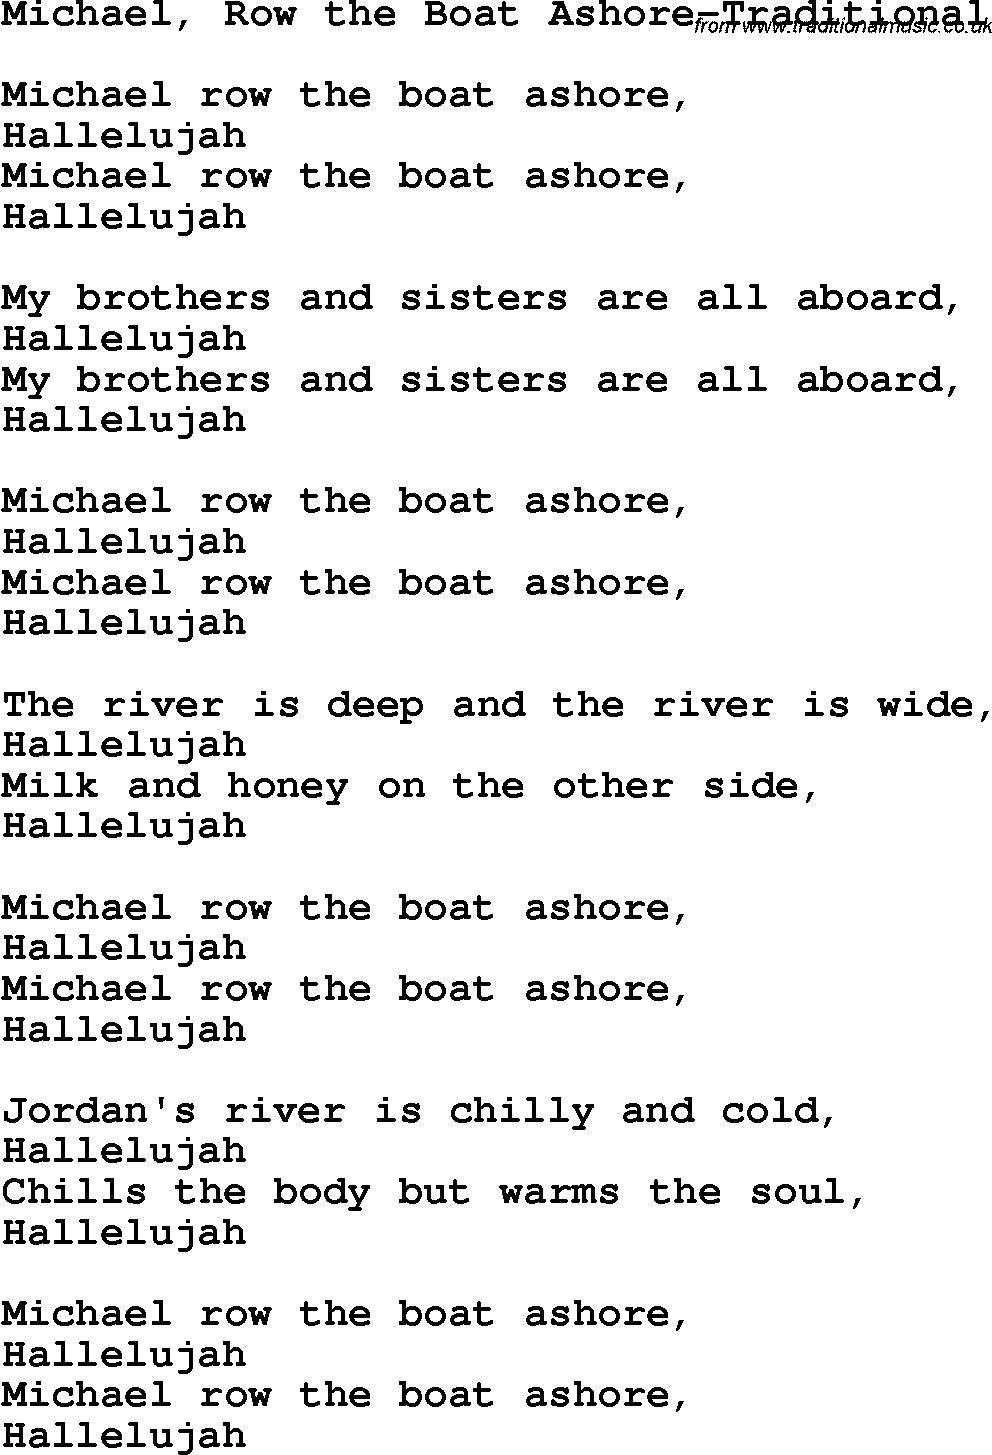 Christian Chlidrens Song Michael, Row The Boat Ashore-Traditional Lyrics